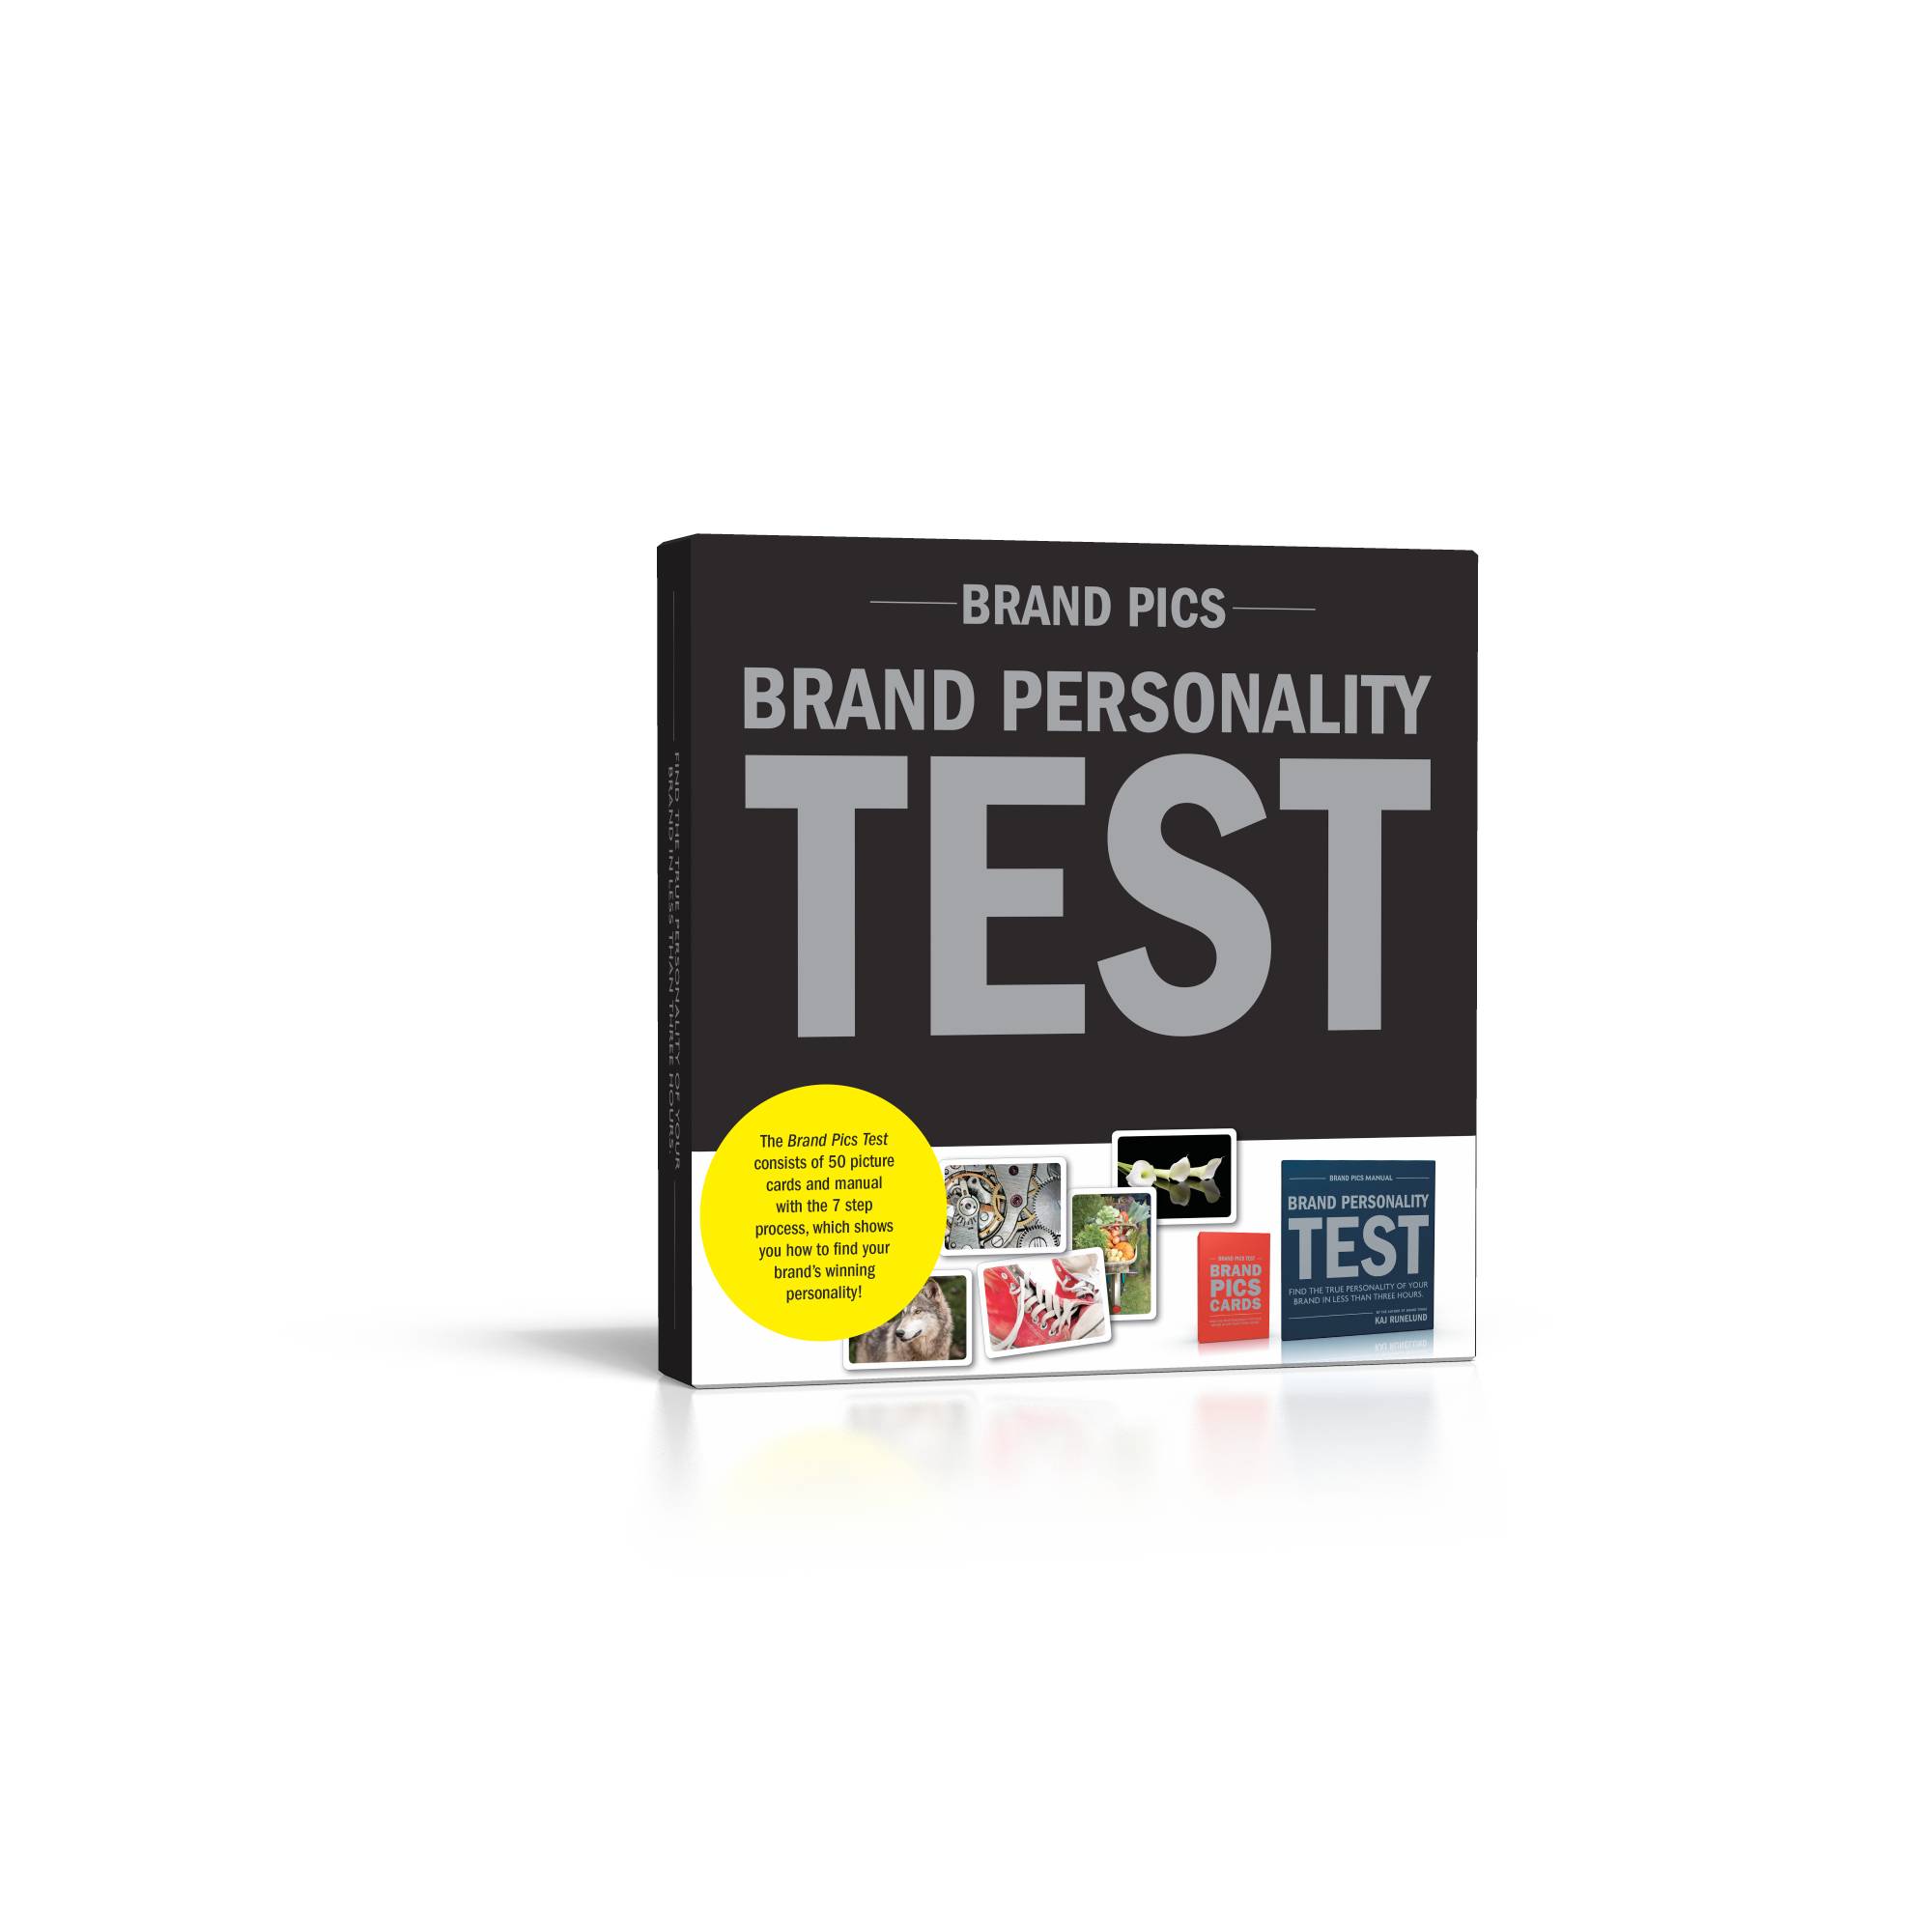 BrandPics Brandpersonality Test